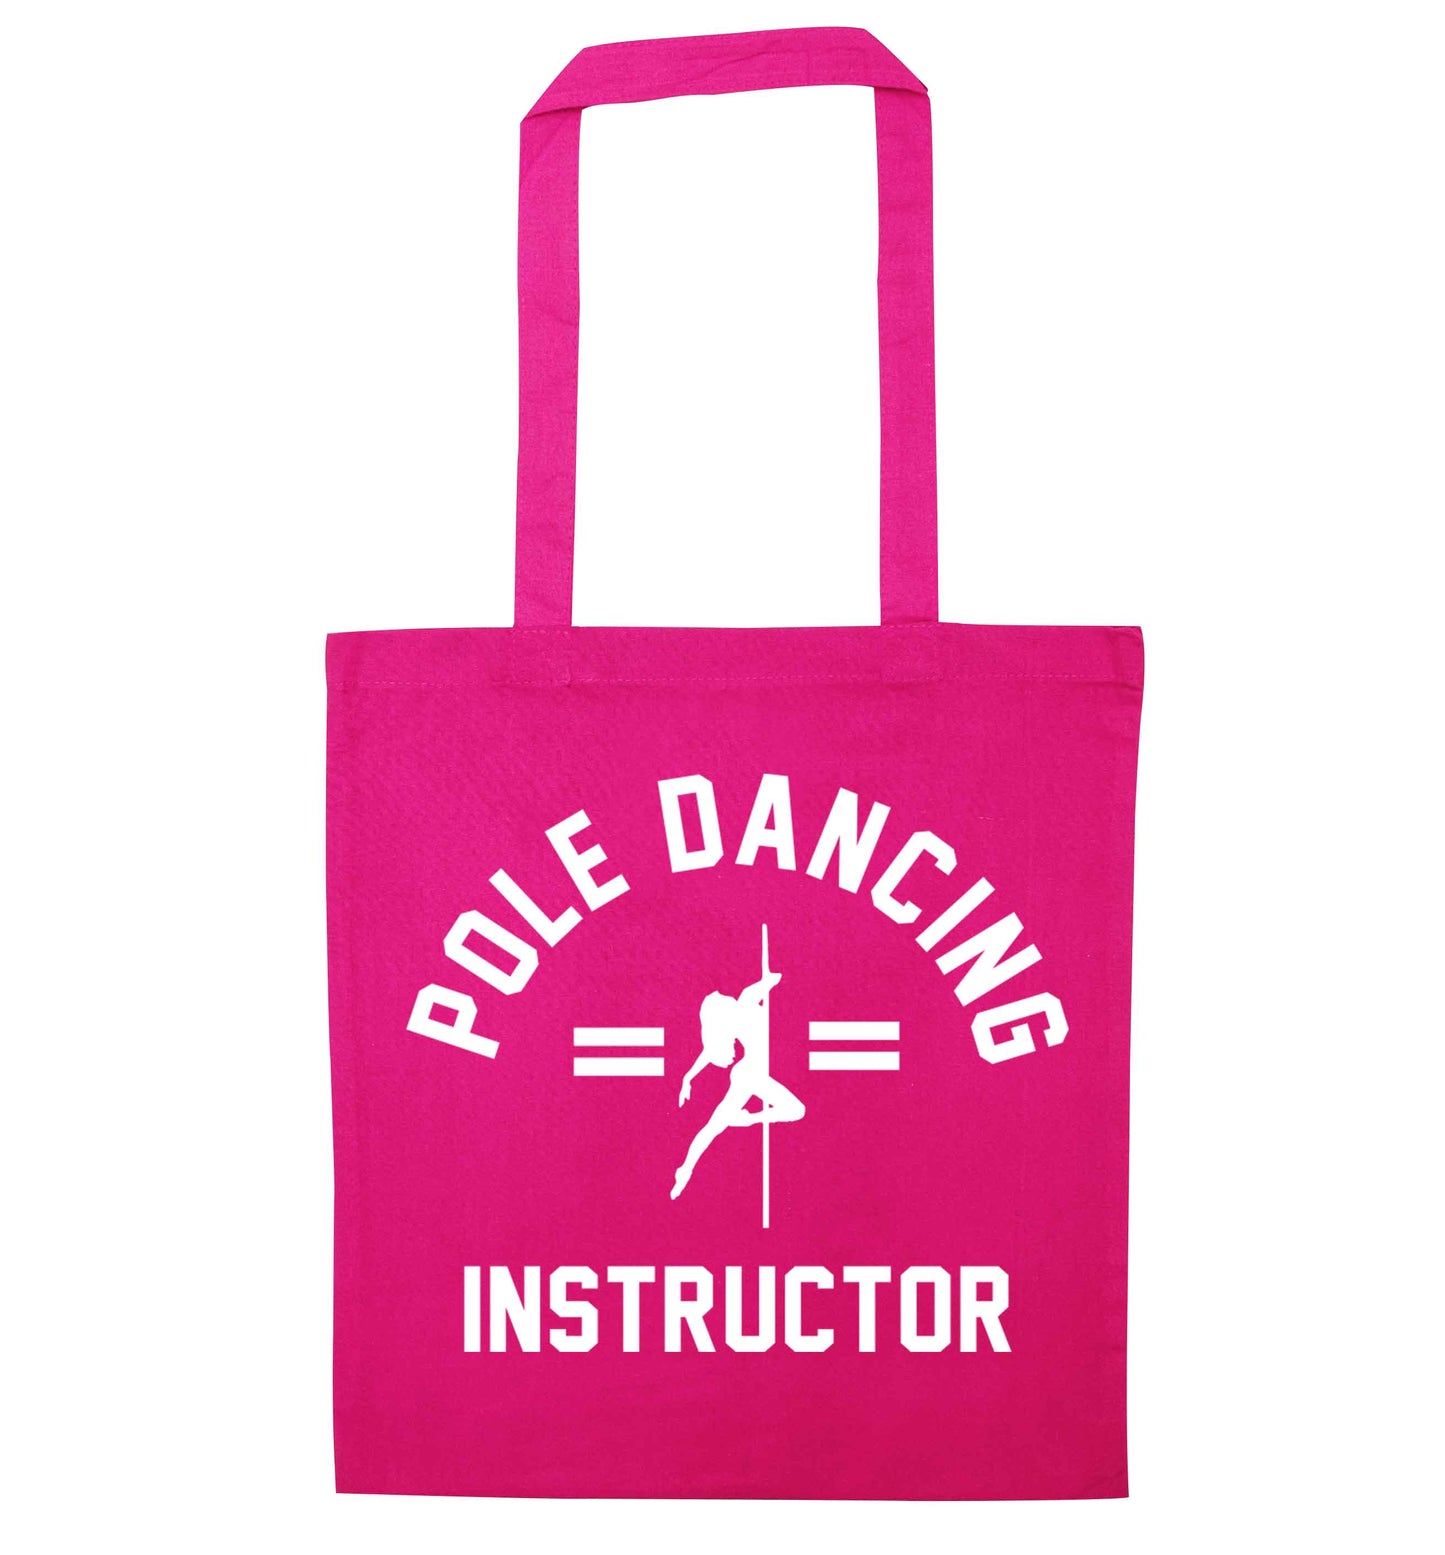 Pole dancing instructor pink tote bag